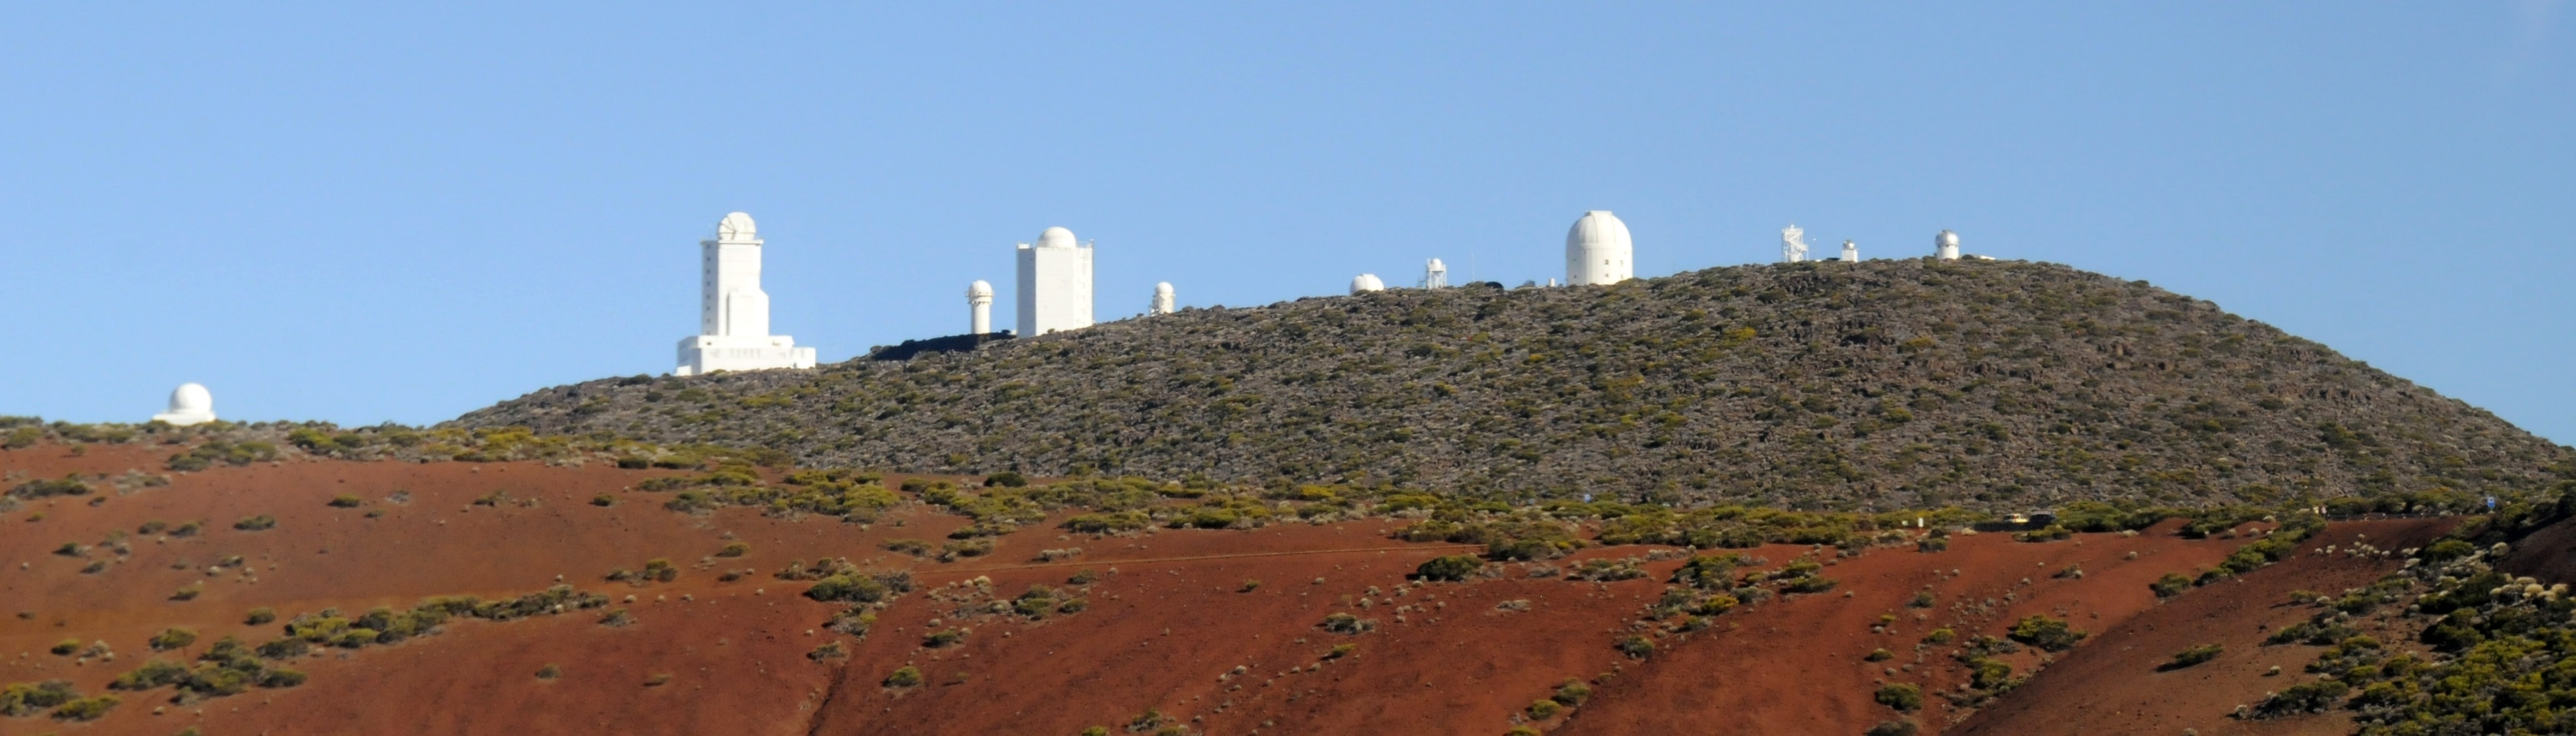 Tiede Observatory, Tenerife, Canary Islands, Spain